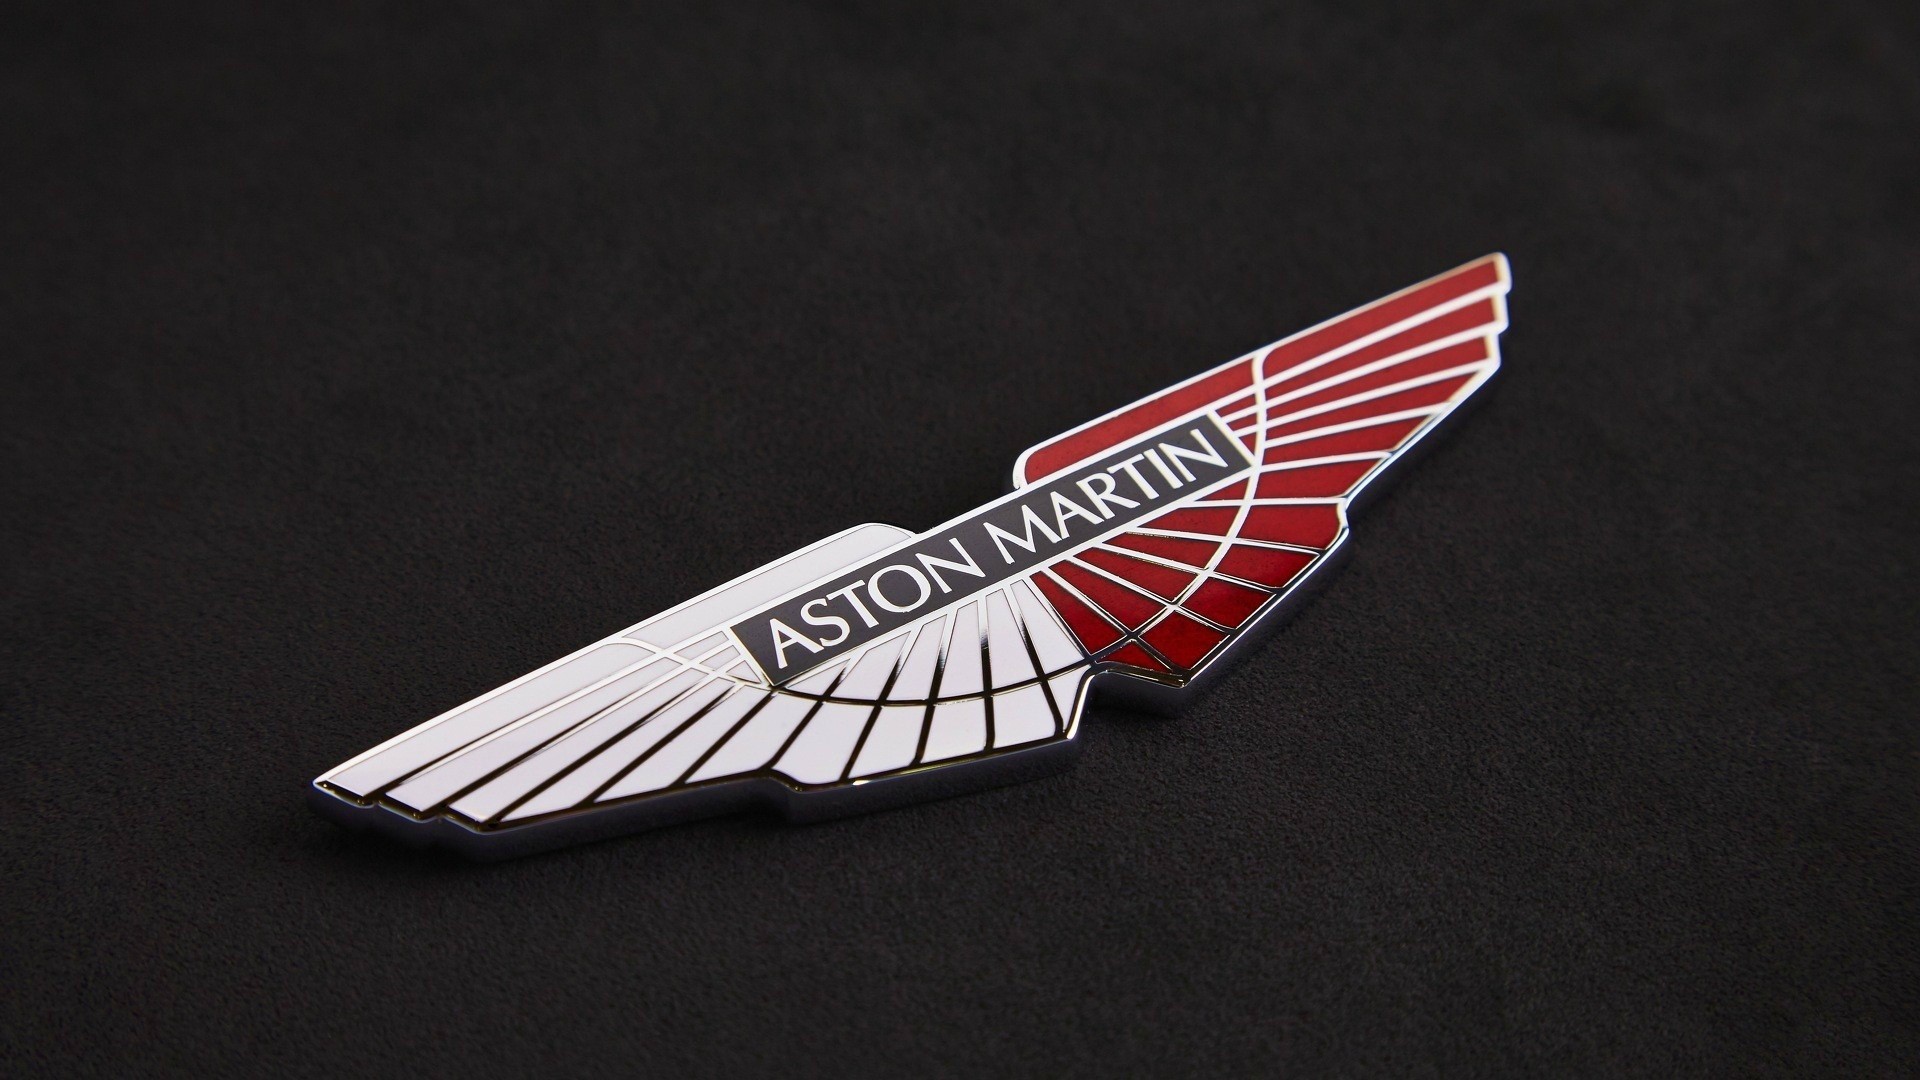 1920x1080 Brands and Logo Wallpapers. Previous Wallpaper Â· Aston Martin ...